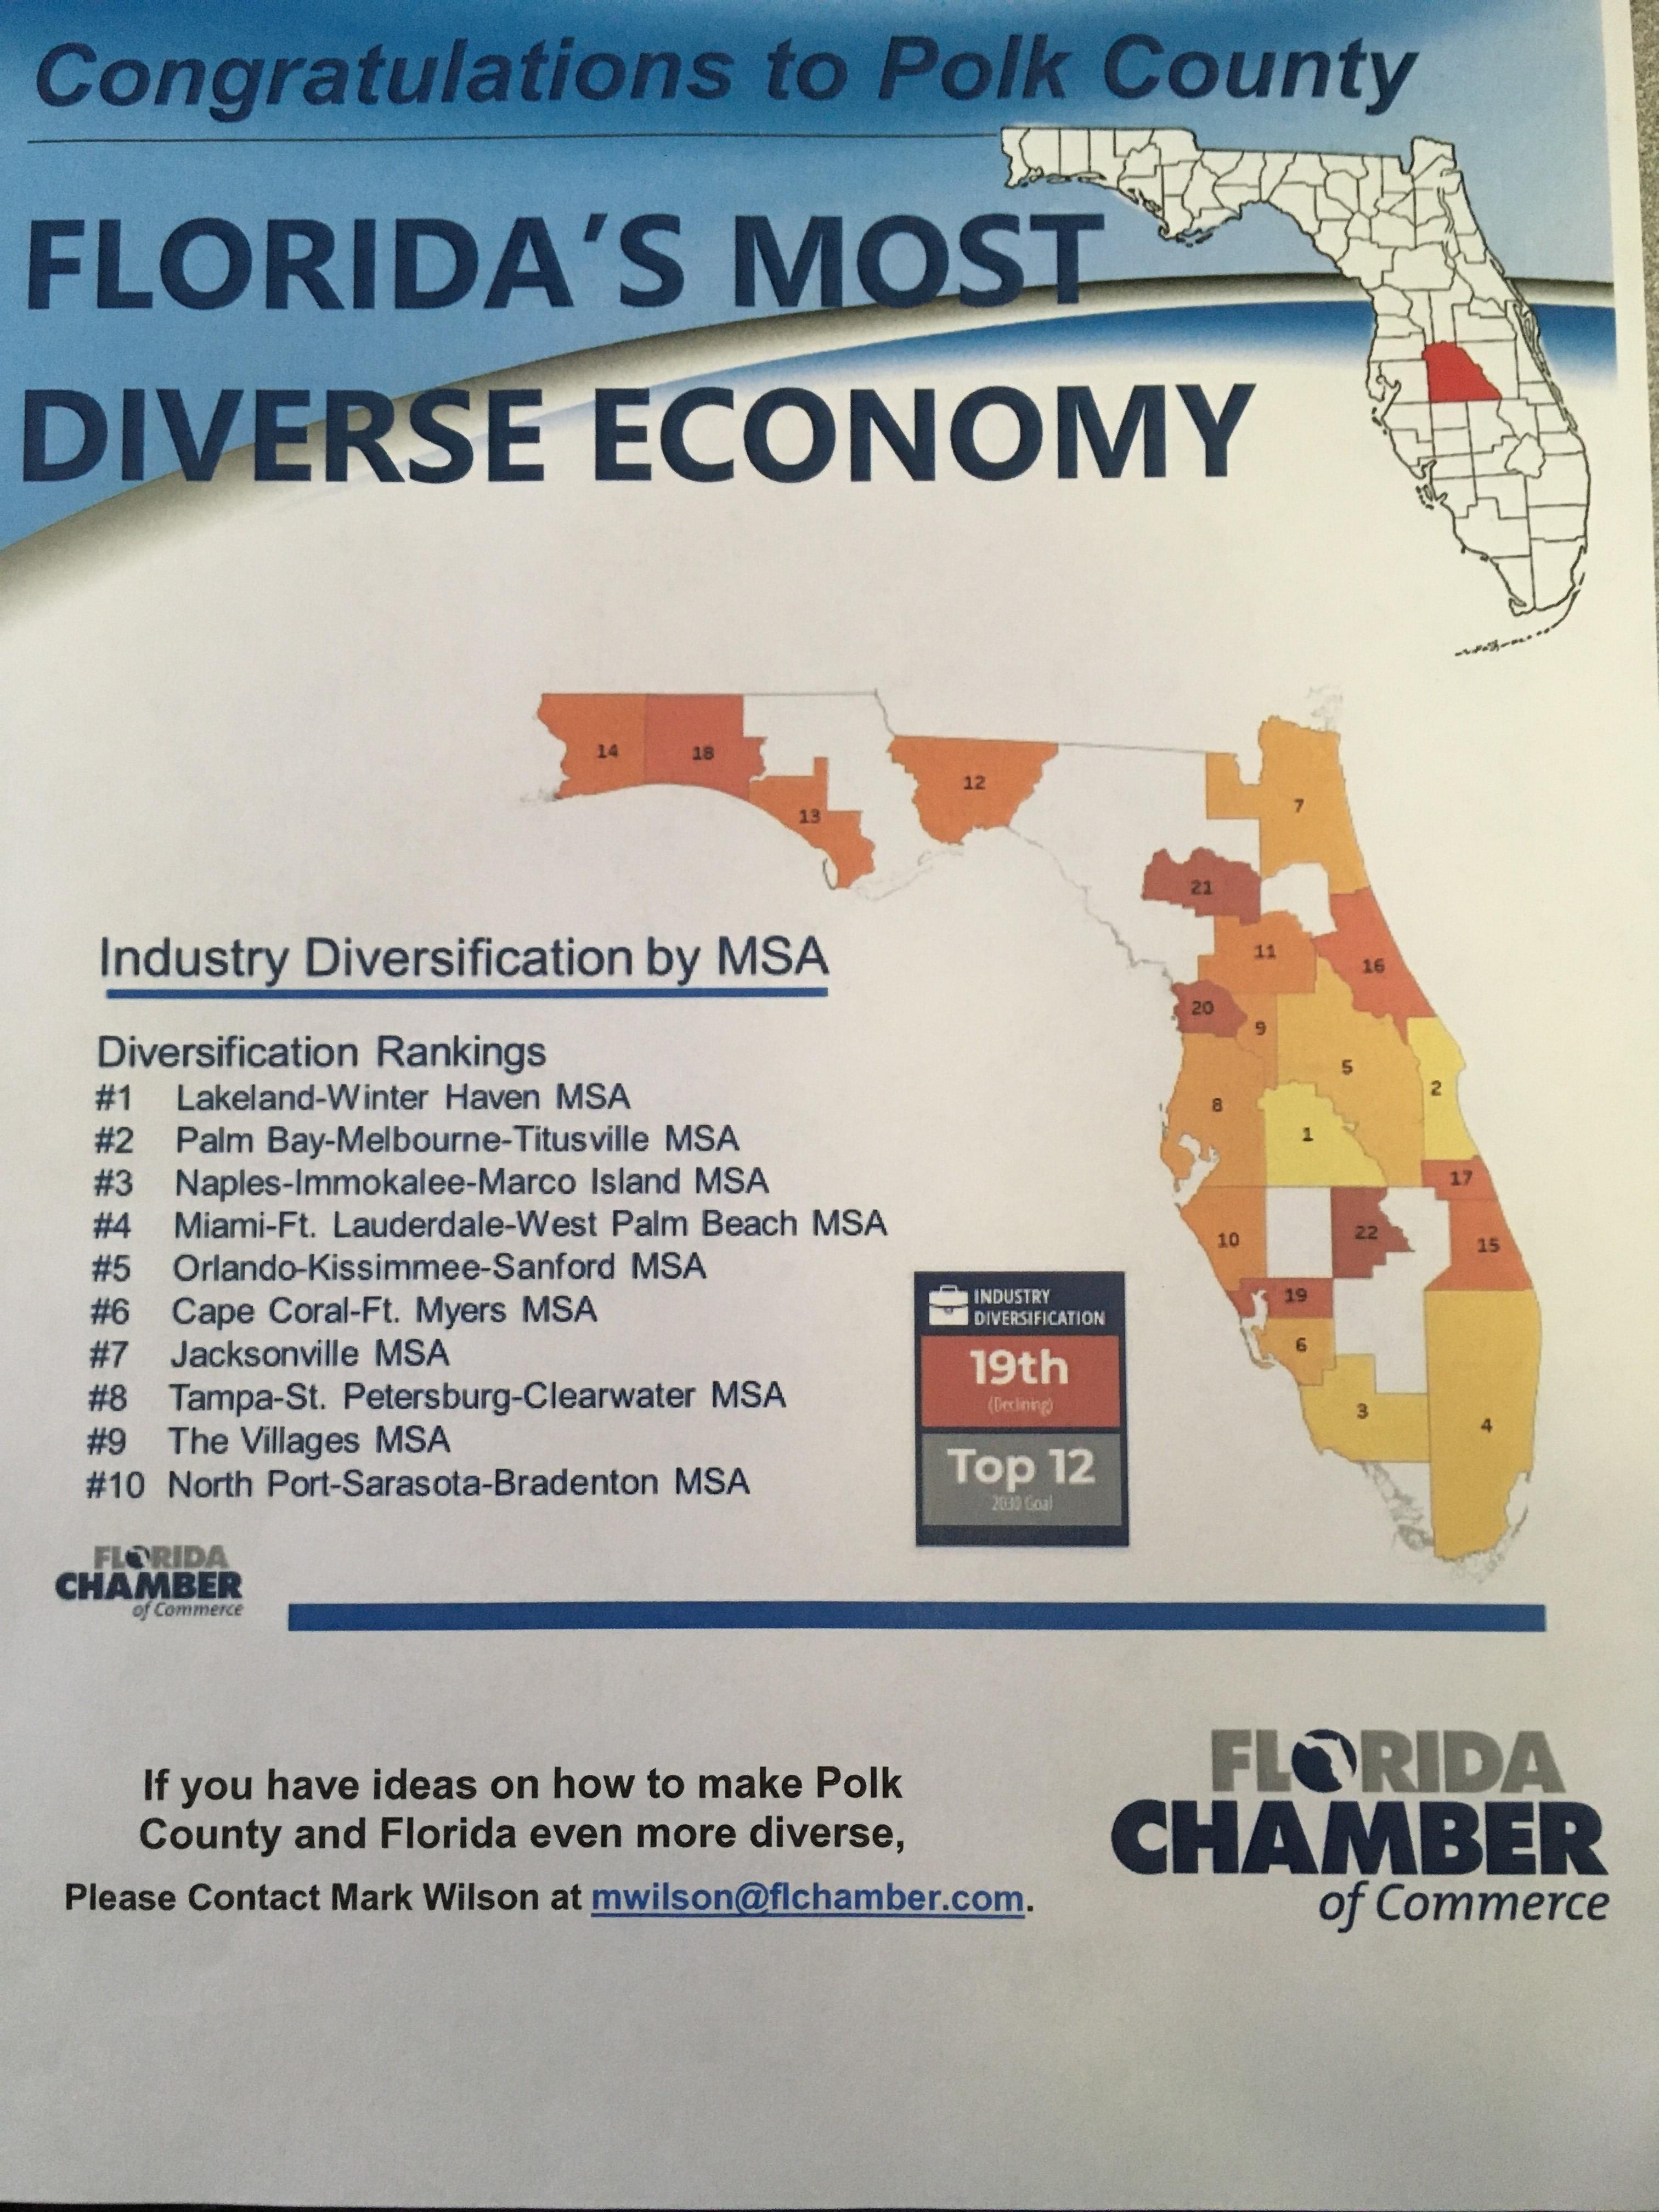 Florida's Most Diverse Economy!